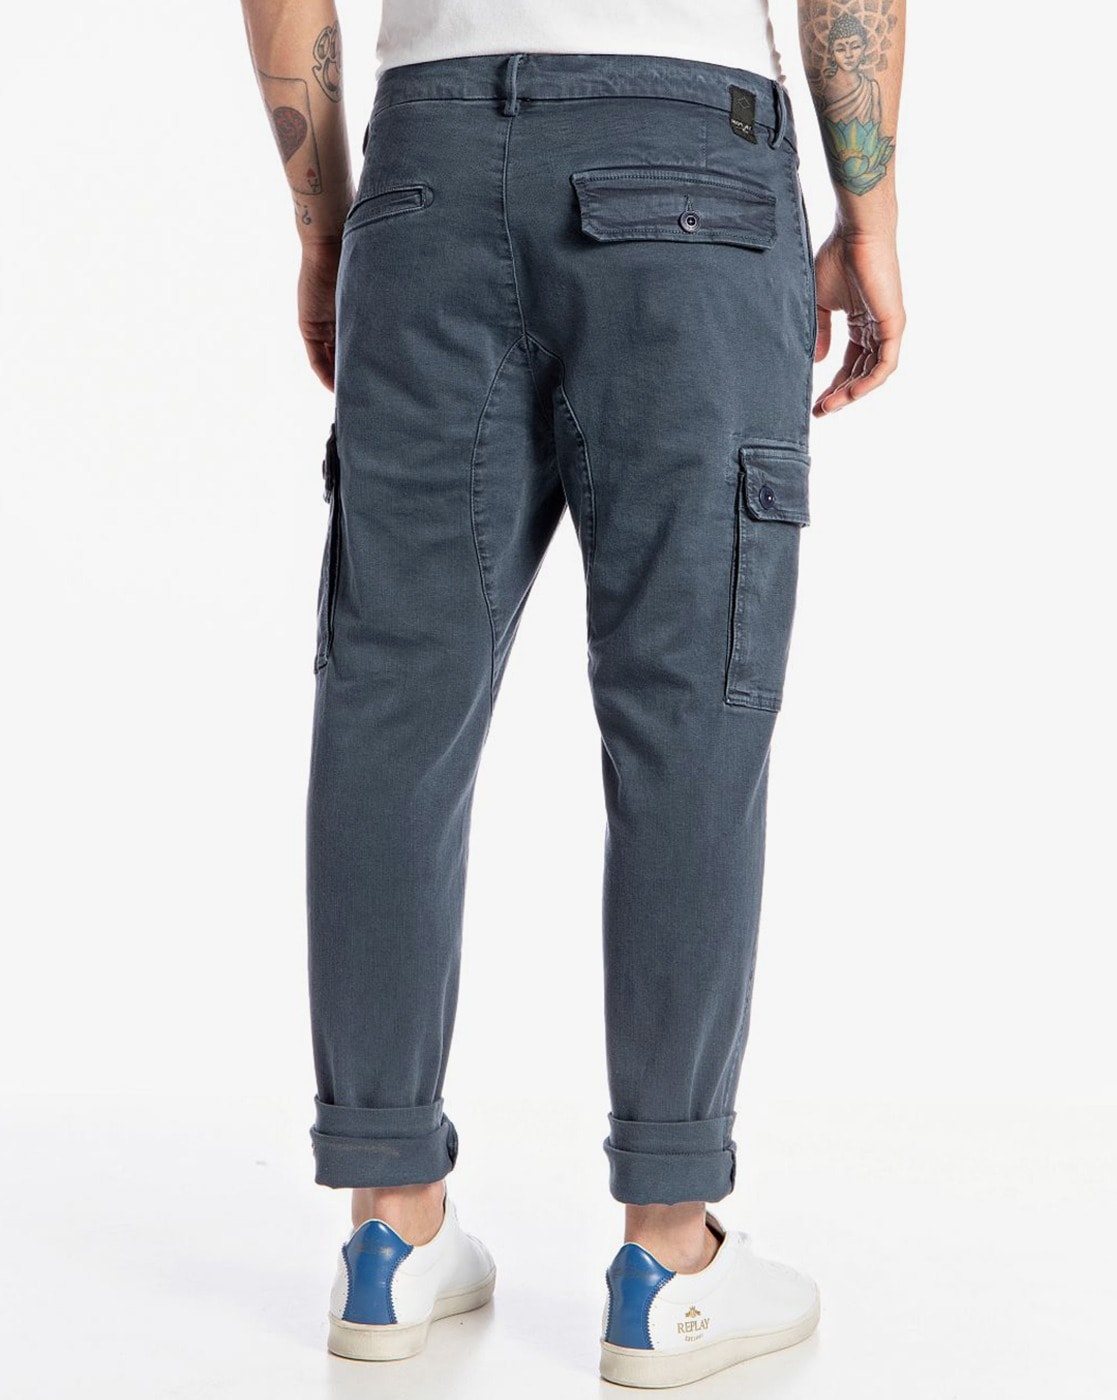 Wideleg cargo jeans - Women | Mango USA